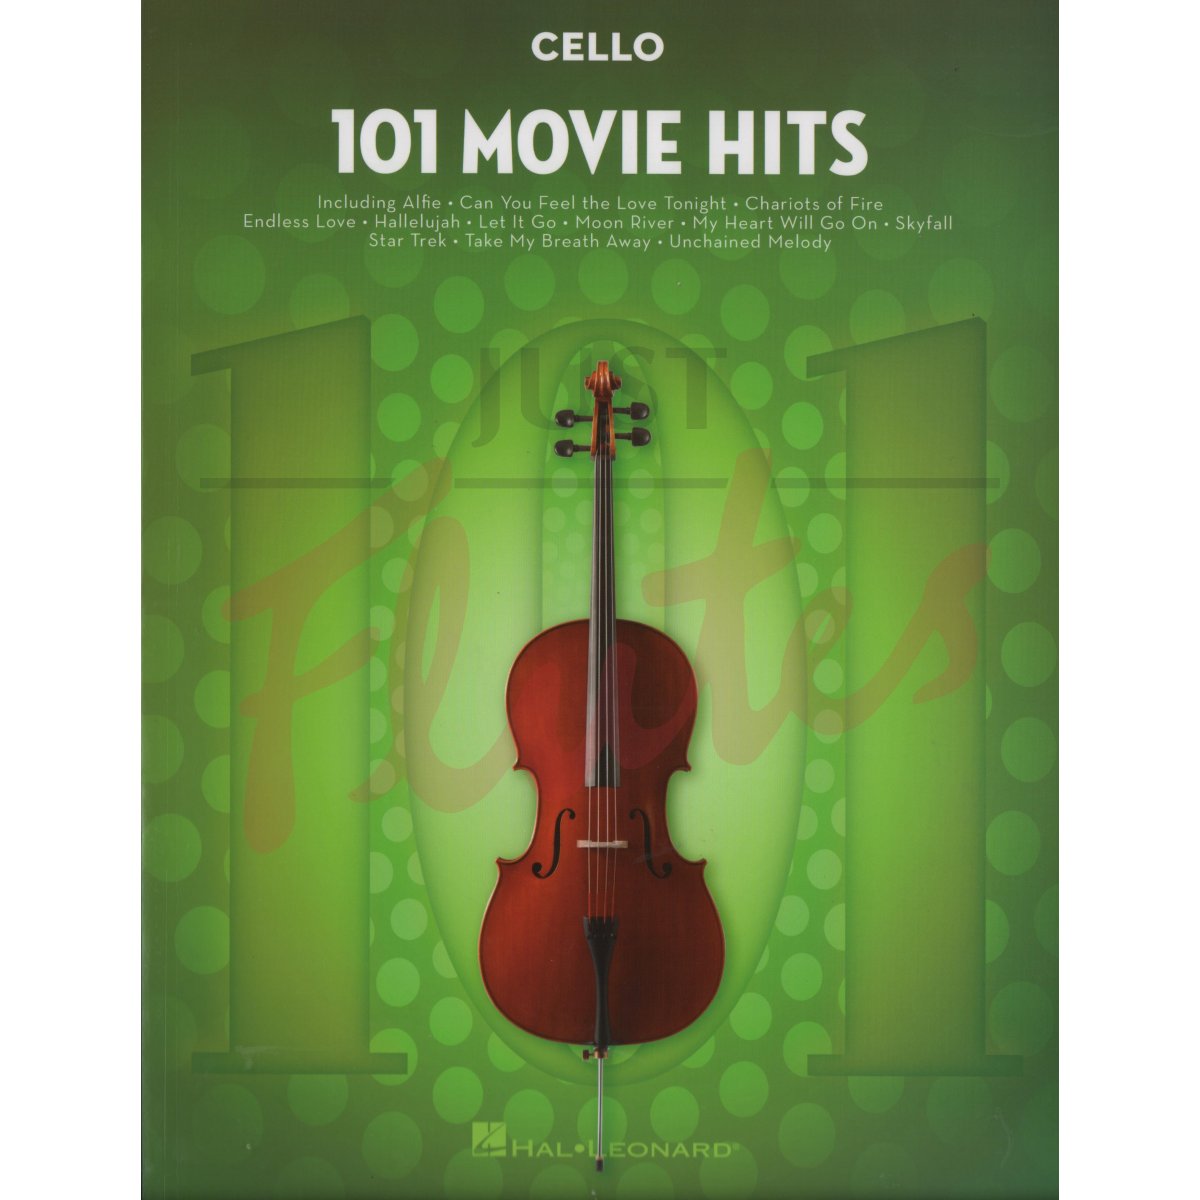 101 Movie Hits [Cello]